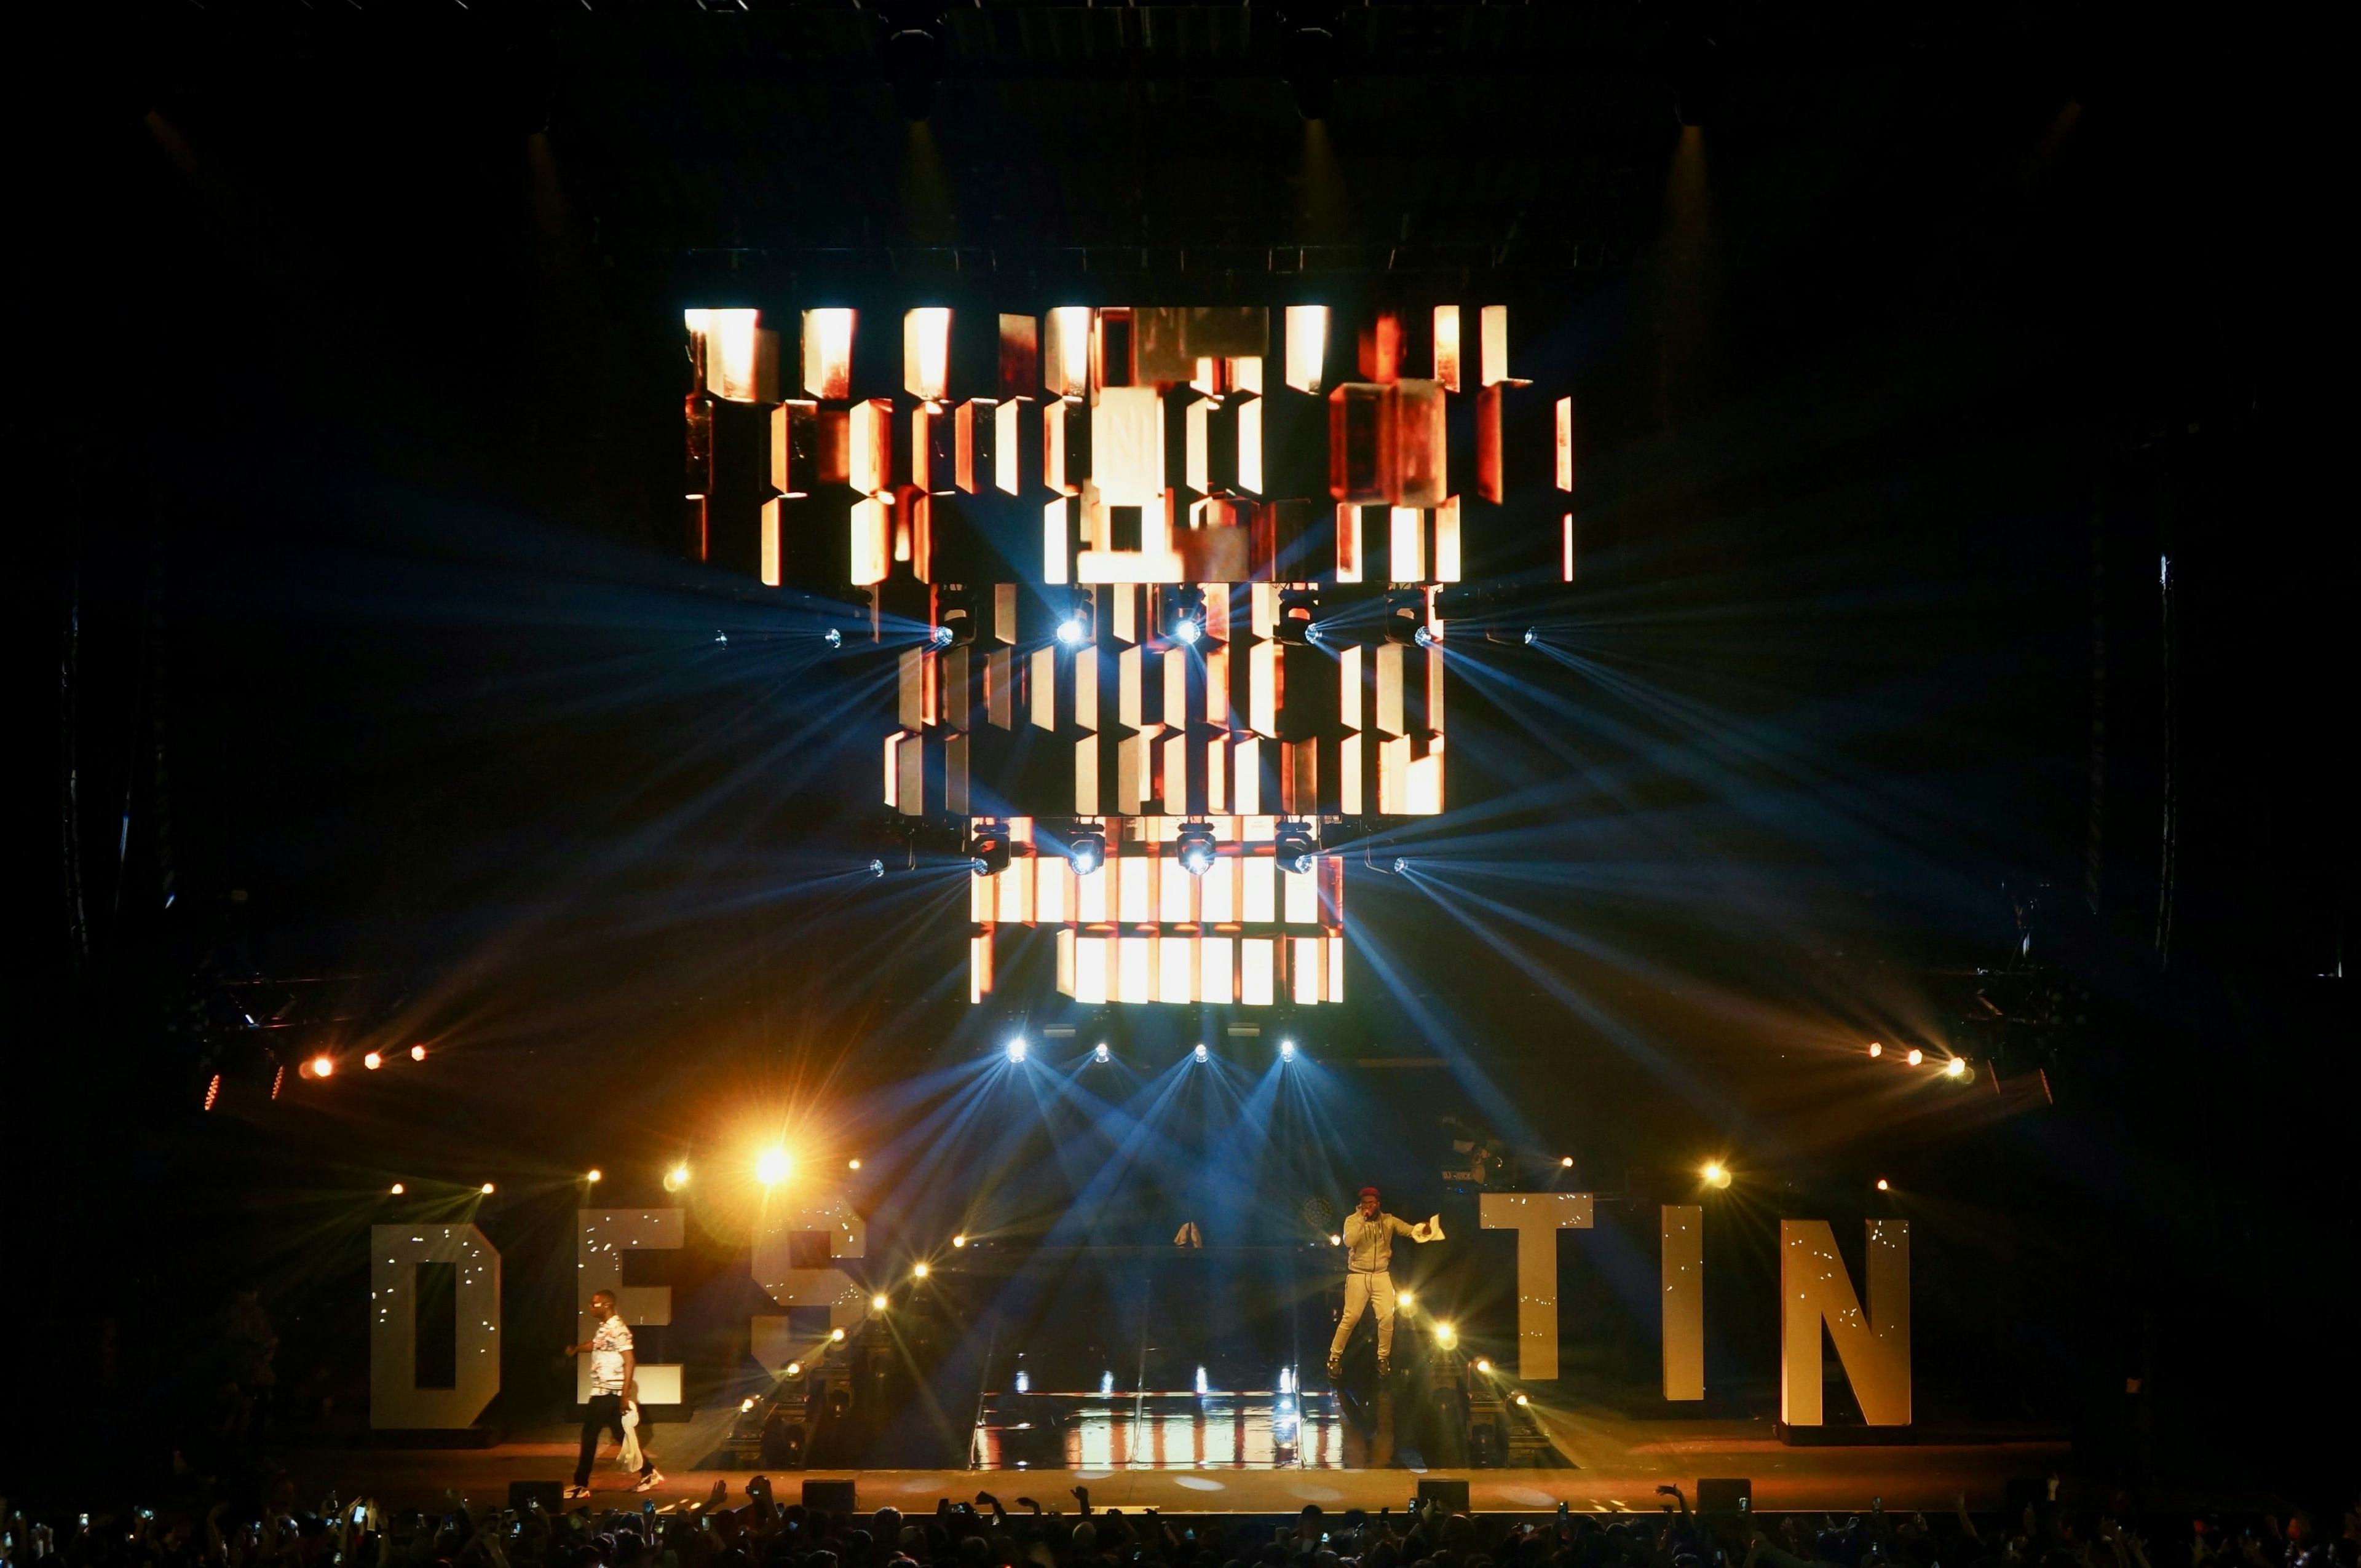 Ninho, Destin Tour, 2019, Scenography, Light Design, Video Design, LED screen, ramp, illuminated letters